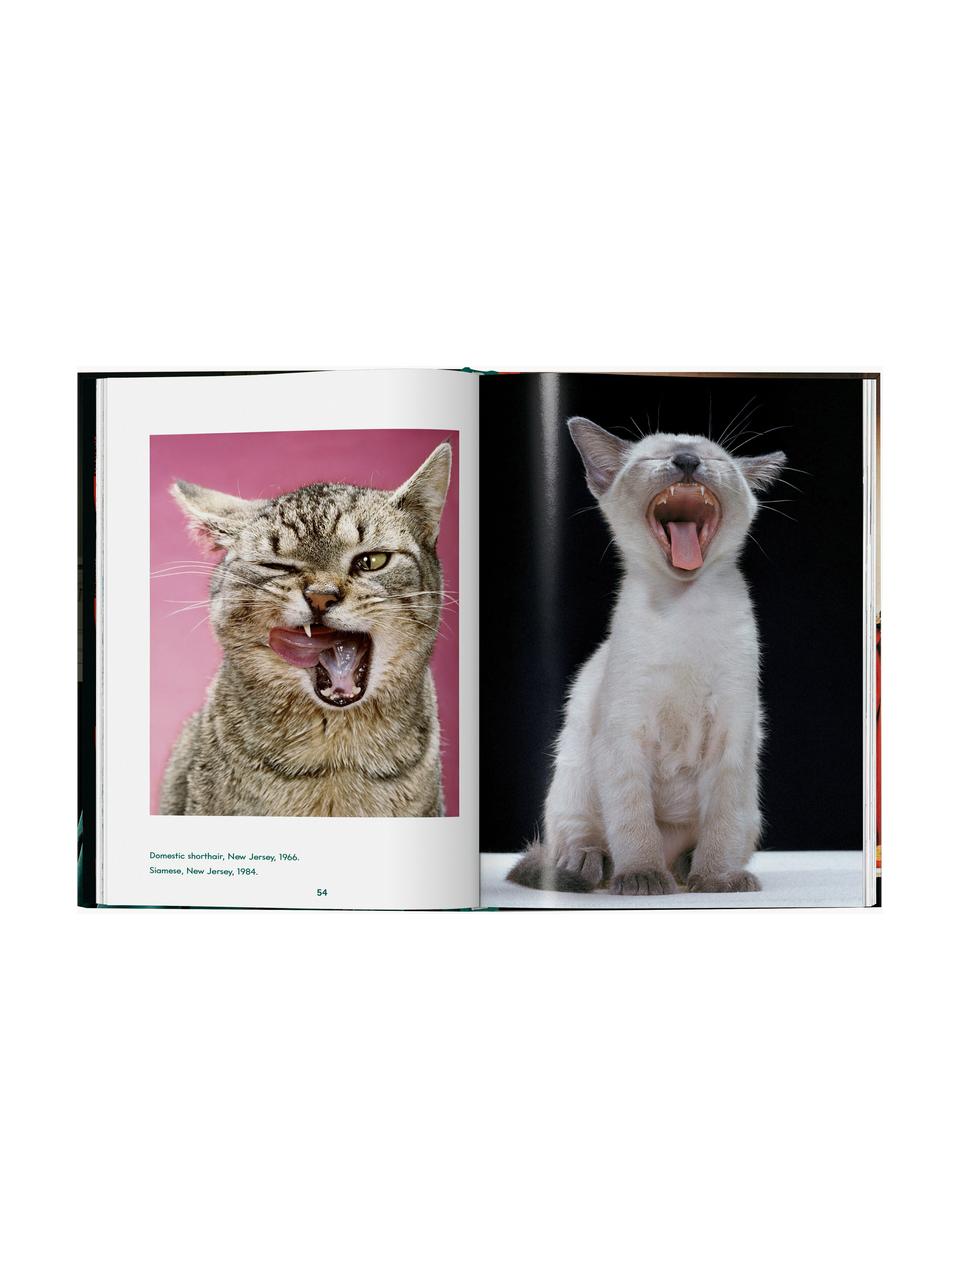 Bildband Cats. Photographs 1942–2018, Papier, Hardcover, Cats. Photographs 1942–2018, B 14 x H 20 cm